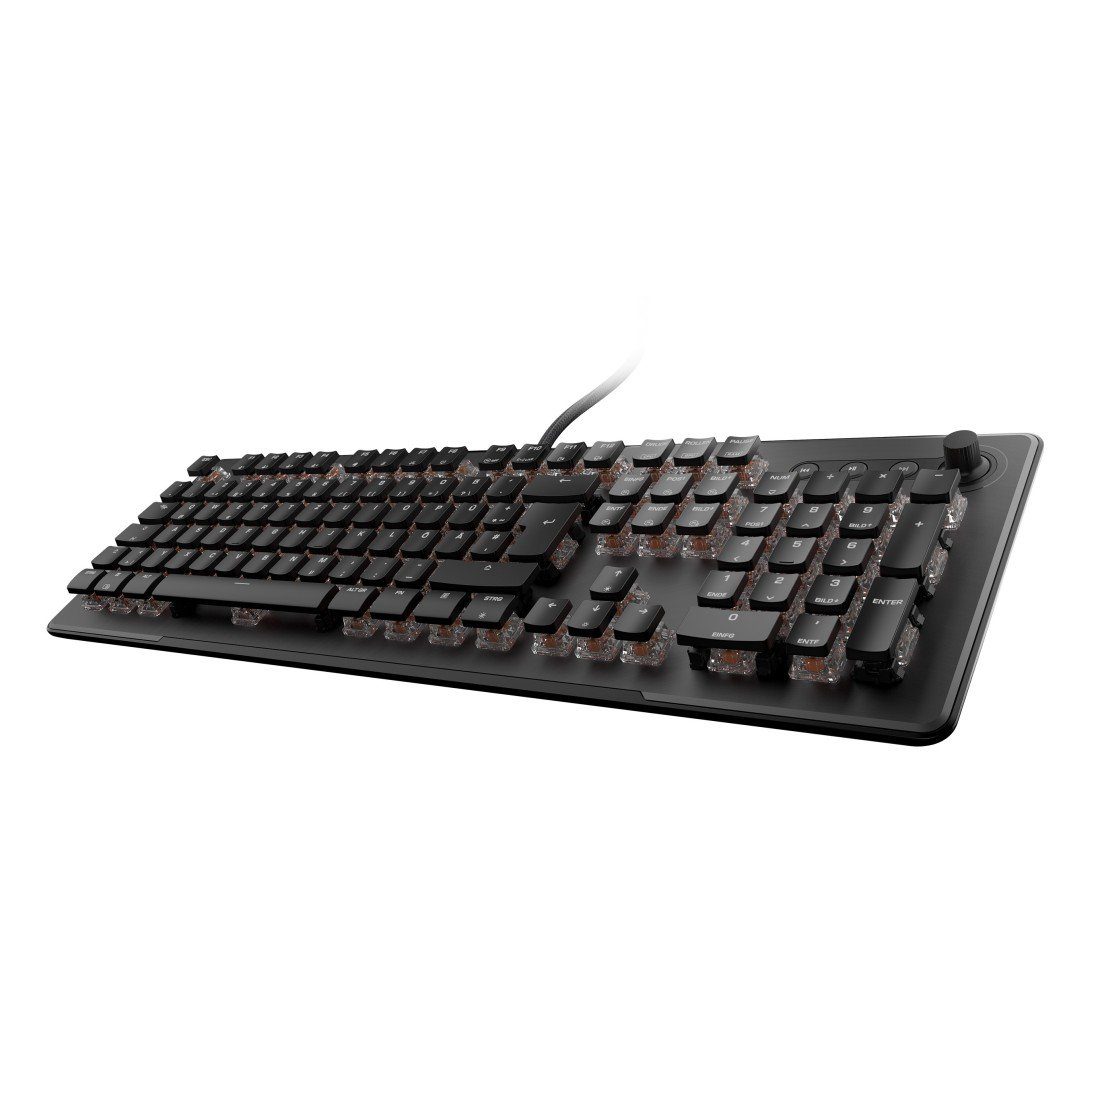 II Gaming-Tastatur ROCCAT Gaming-Tastatur "Vulcan Max", schwarz Tasten lineare mechanische,